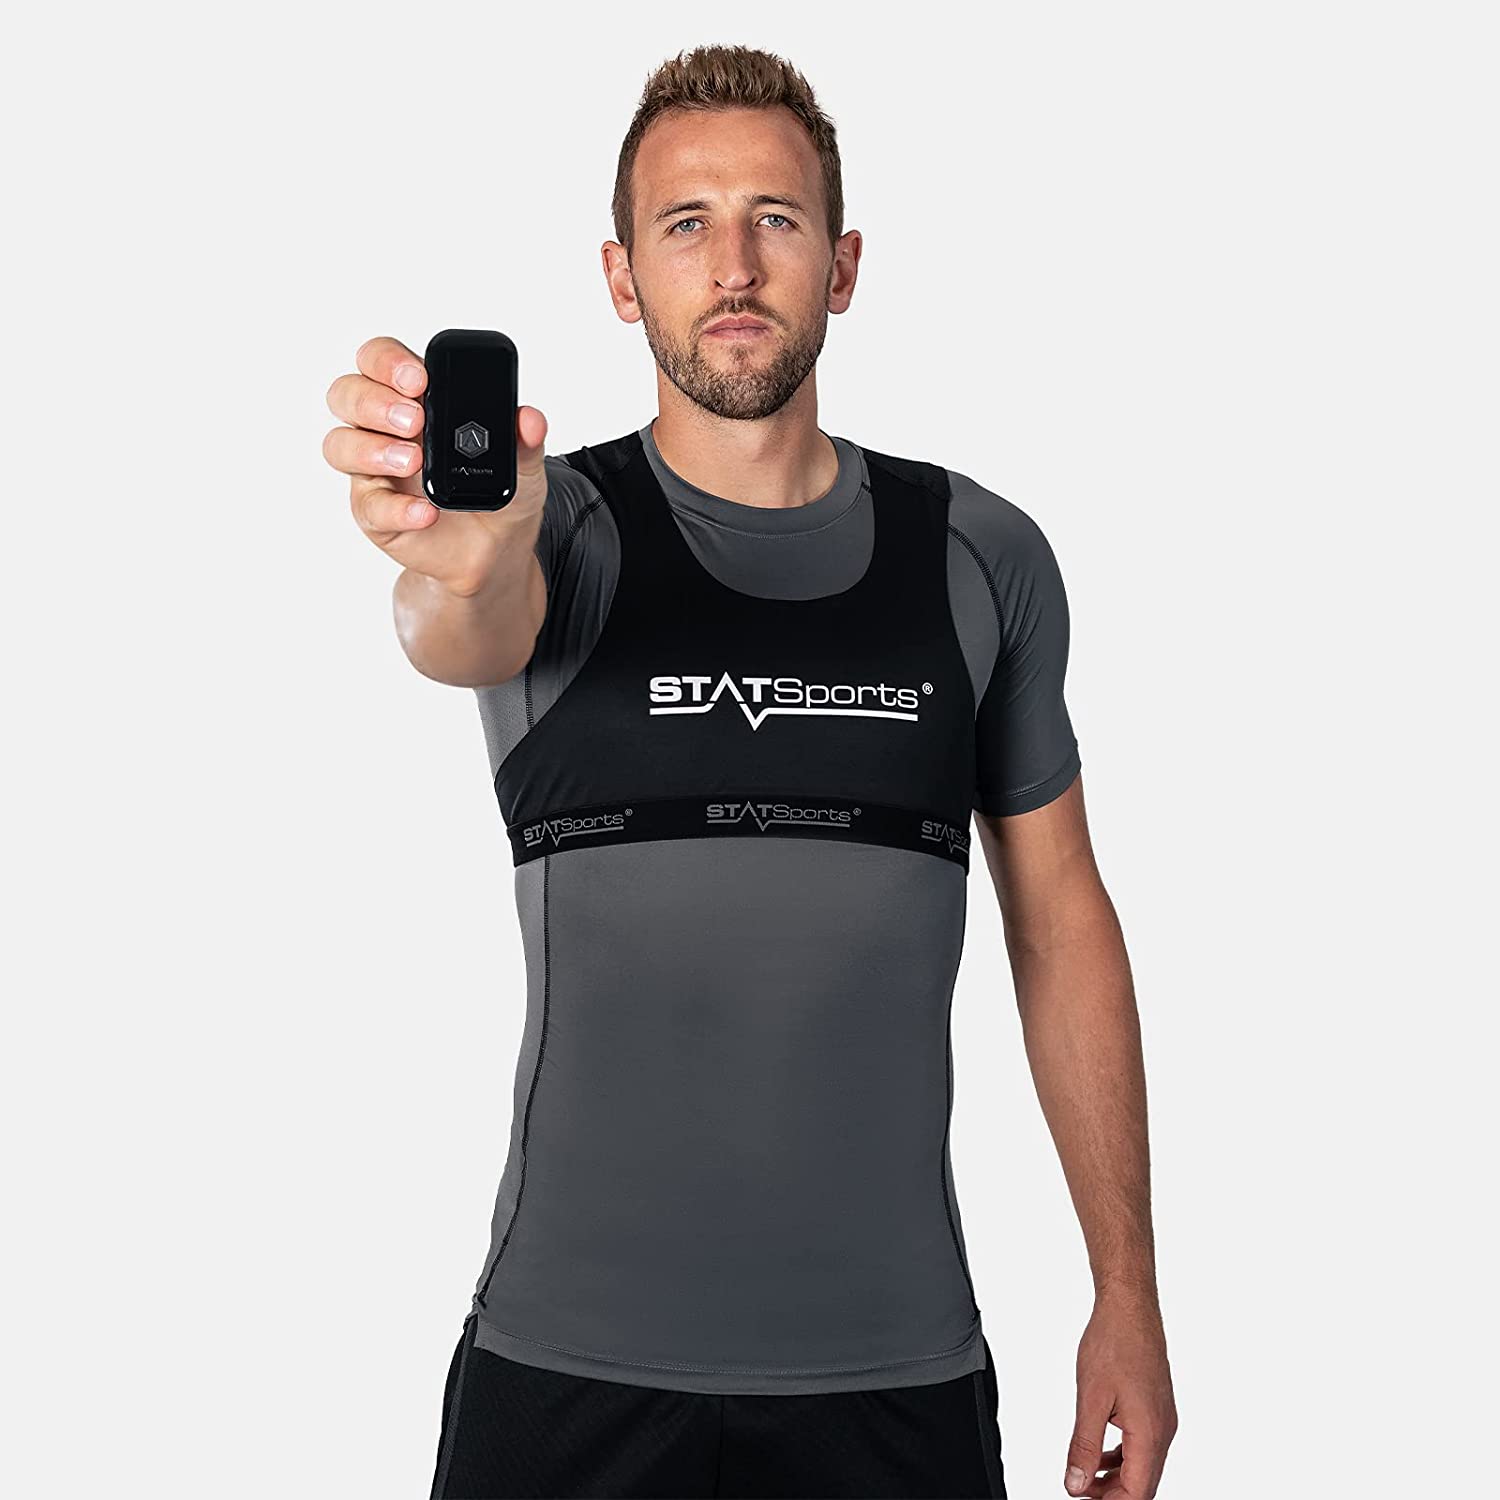 APEX Athlete Series  GPS Performance Tracker